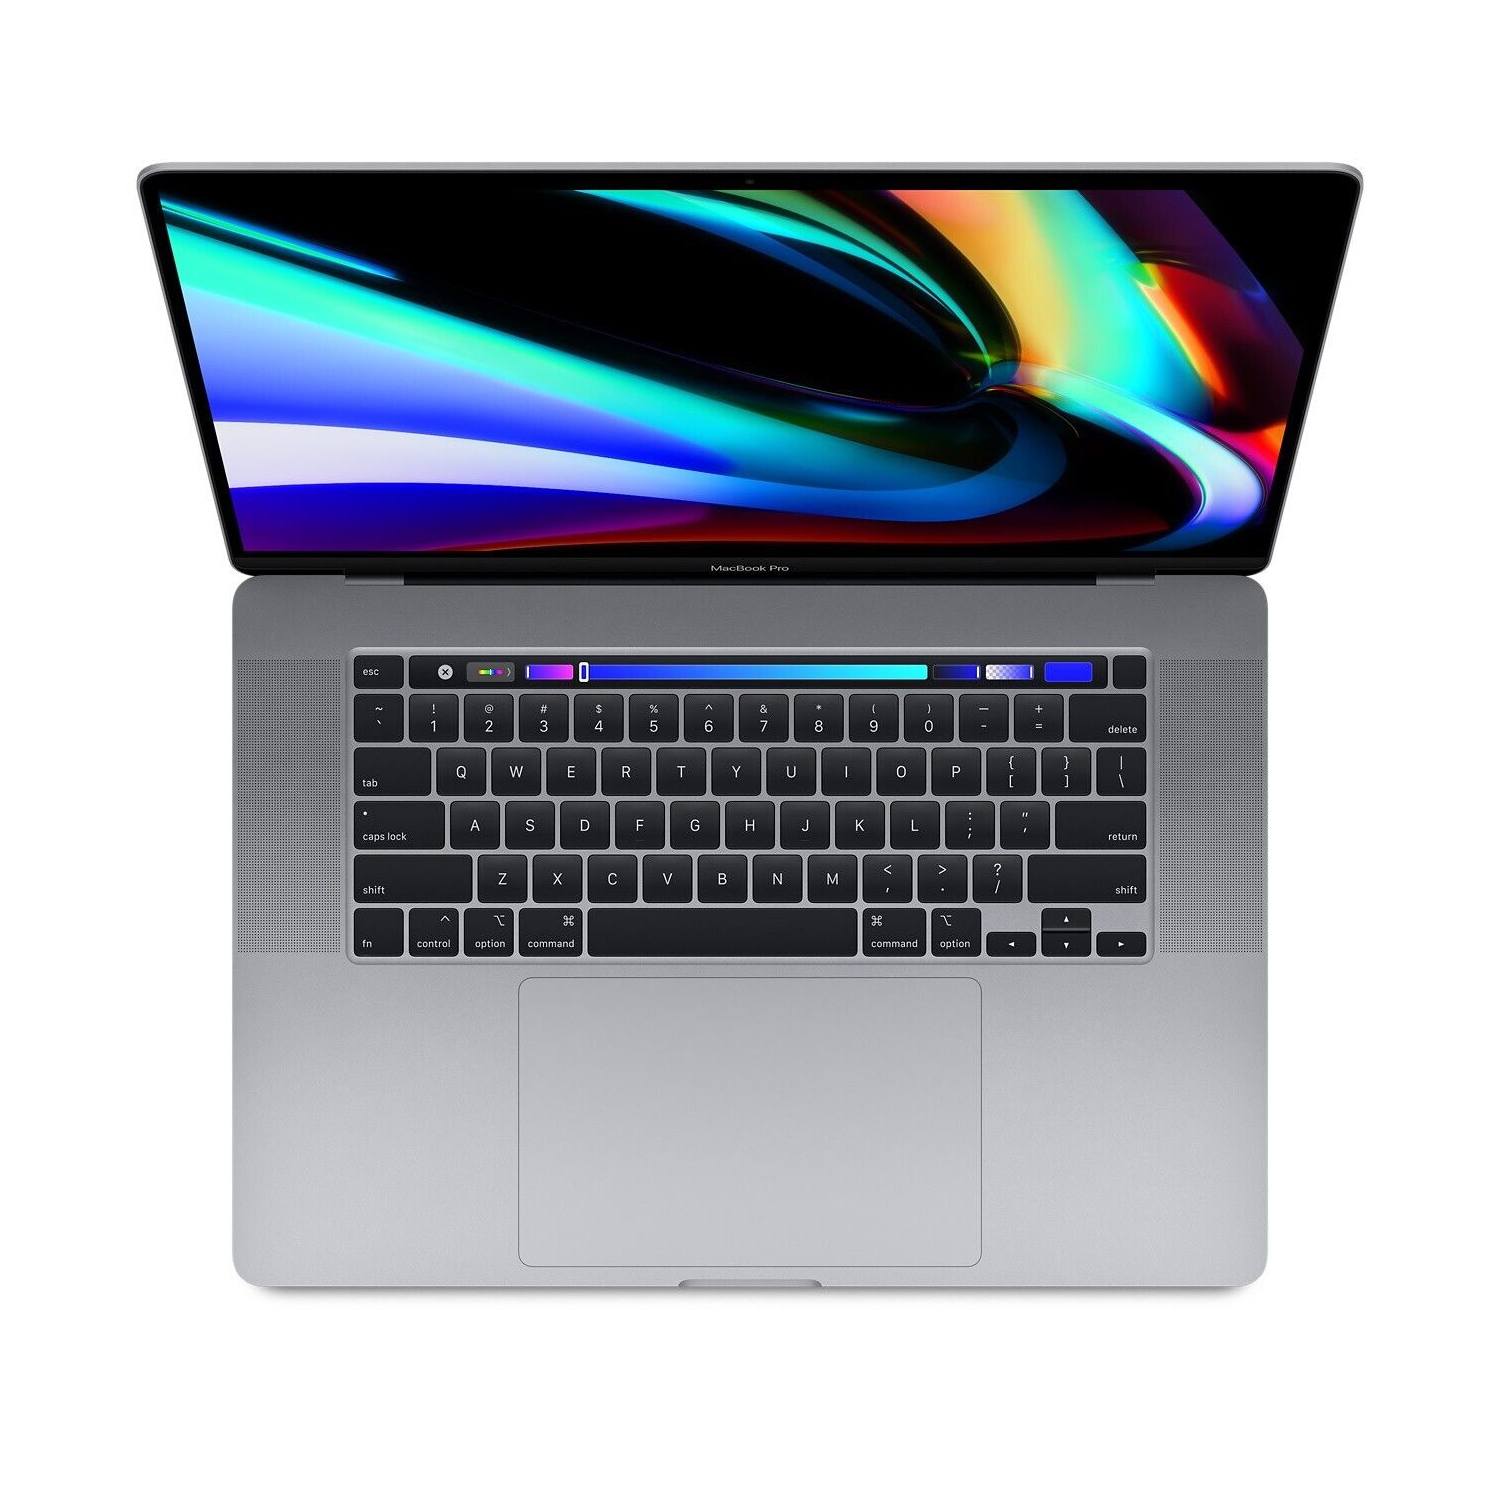 Refurbished (Good) Apple MacBook Pro 2019 13